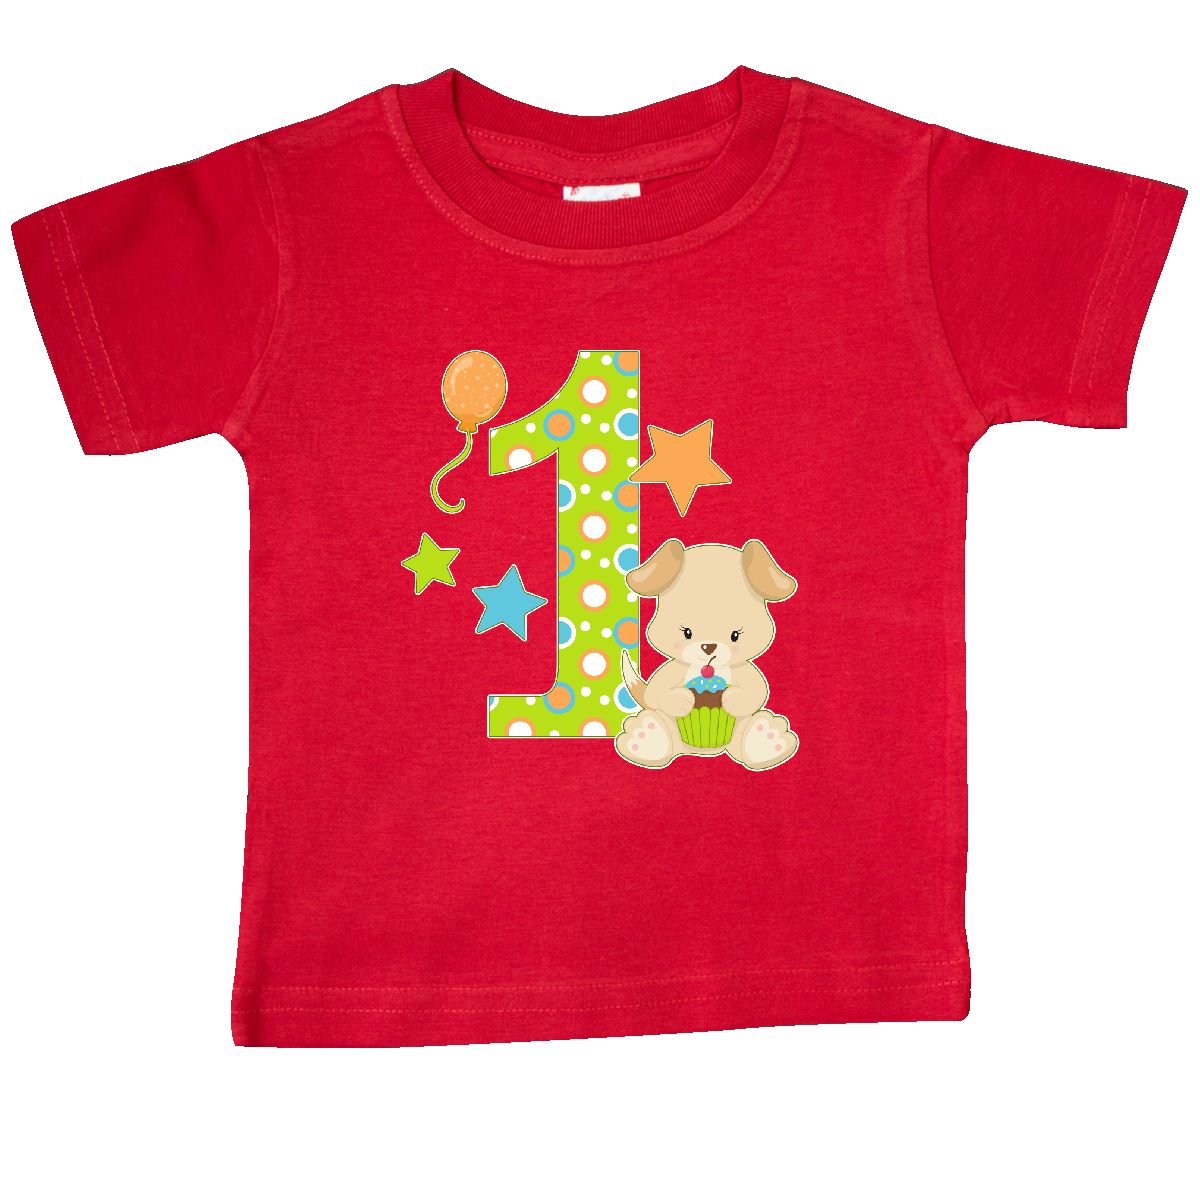 Xuanuan Misfit-S Newborn Unisex Baby Boy Girl Long Sleeve Bodysuit Shirt Cotton Onesies Romper Outfits 0-24 Months 